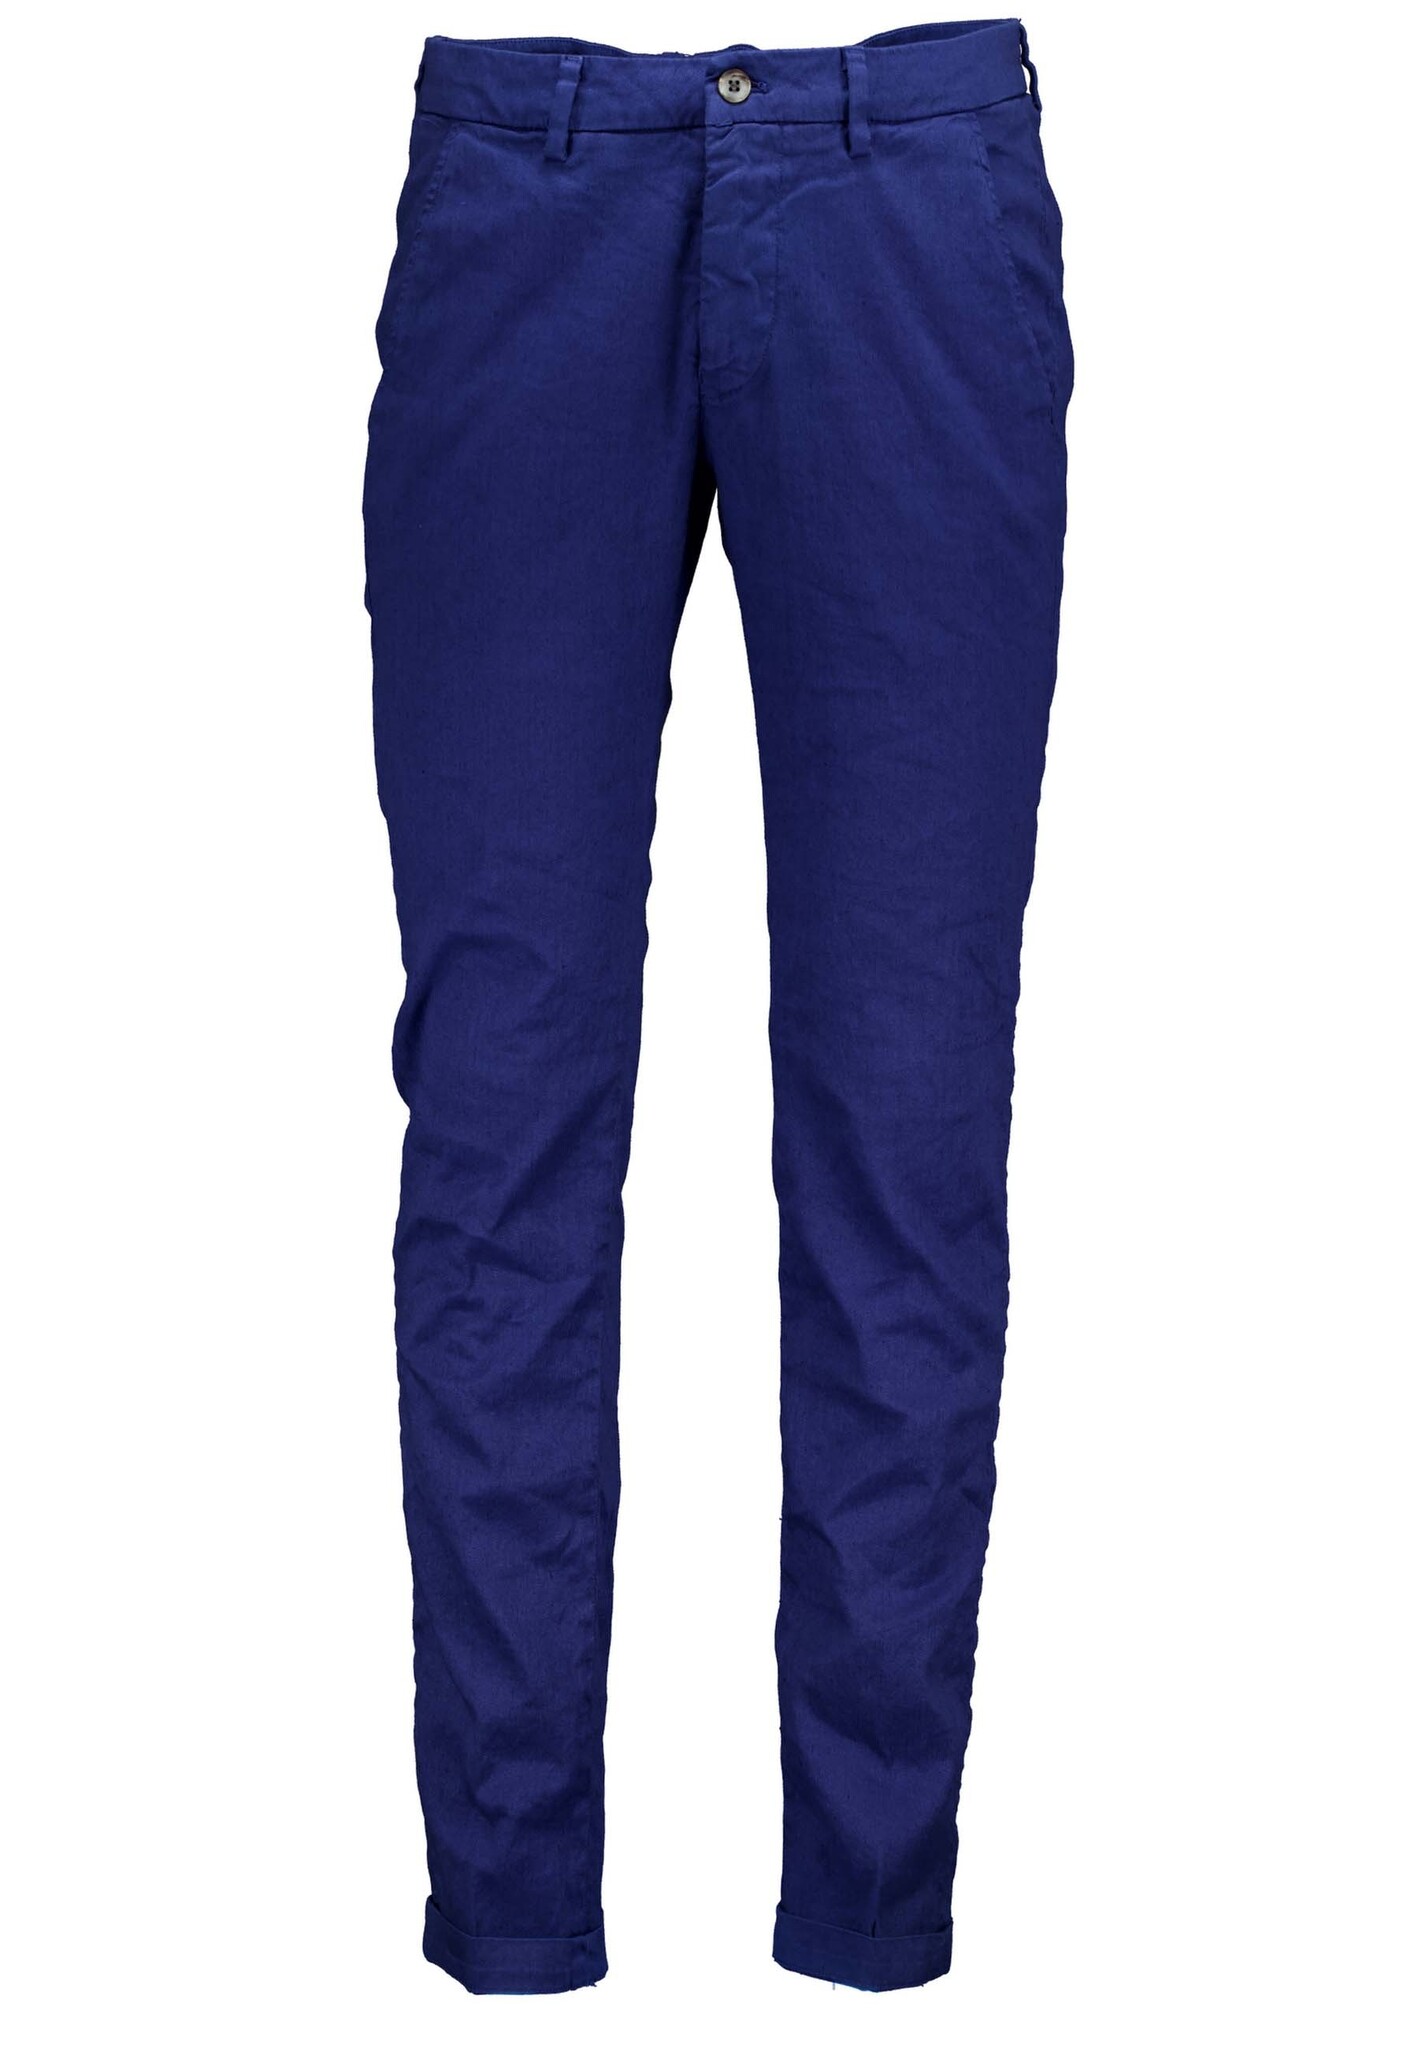 Masons pantalons blauw Heren maat 50